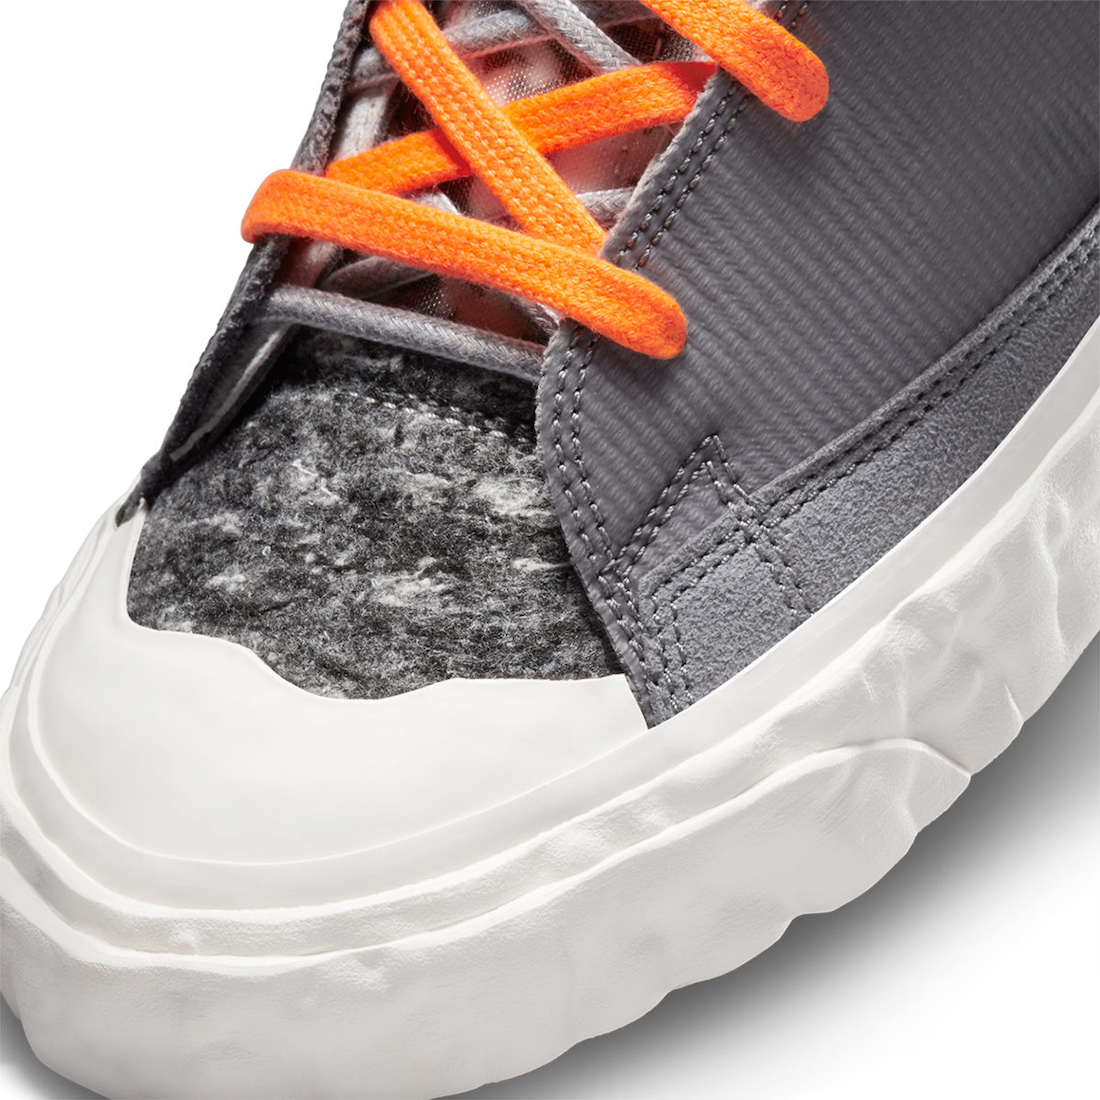 Readymade Nike Blazer Mid Grey Release Date